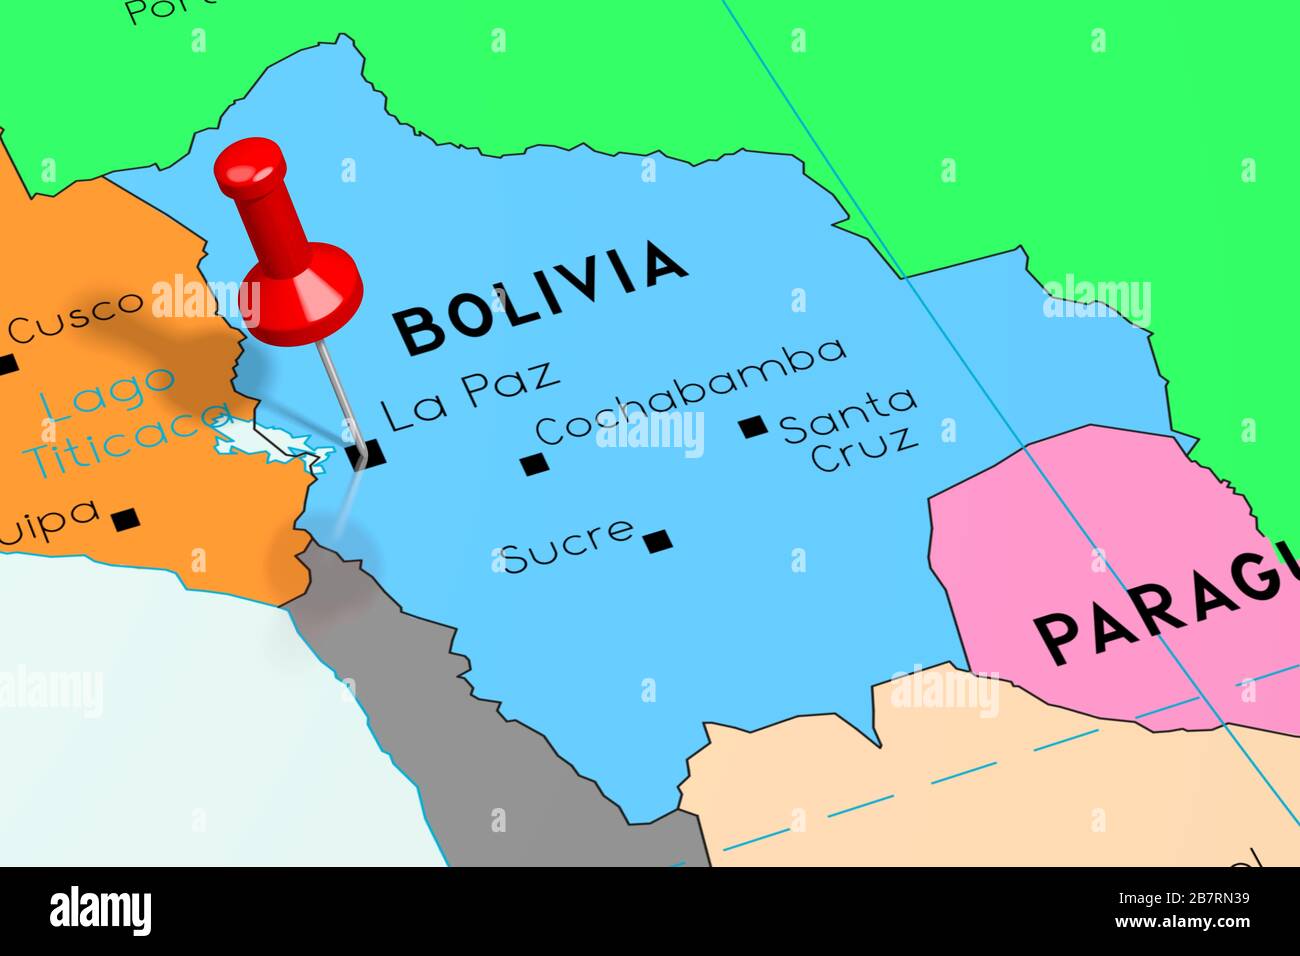 Bolivia, La Paz - capital city, pinned on political map Stock Photo